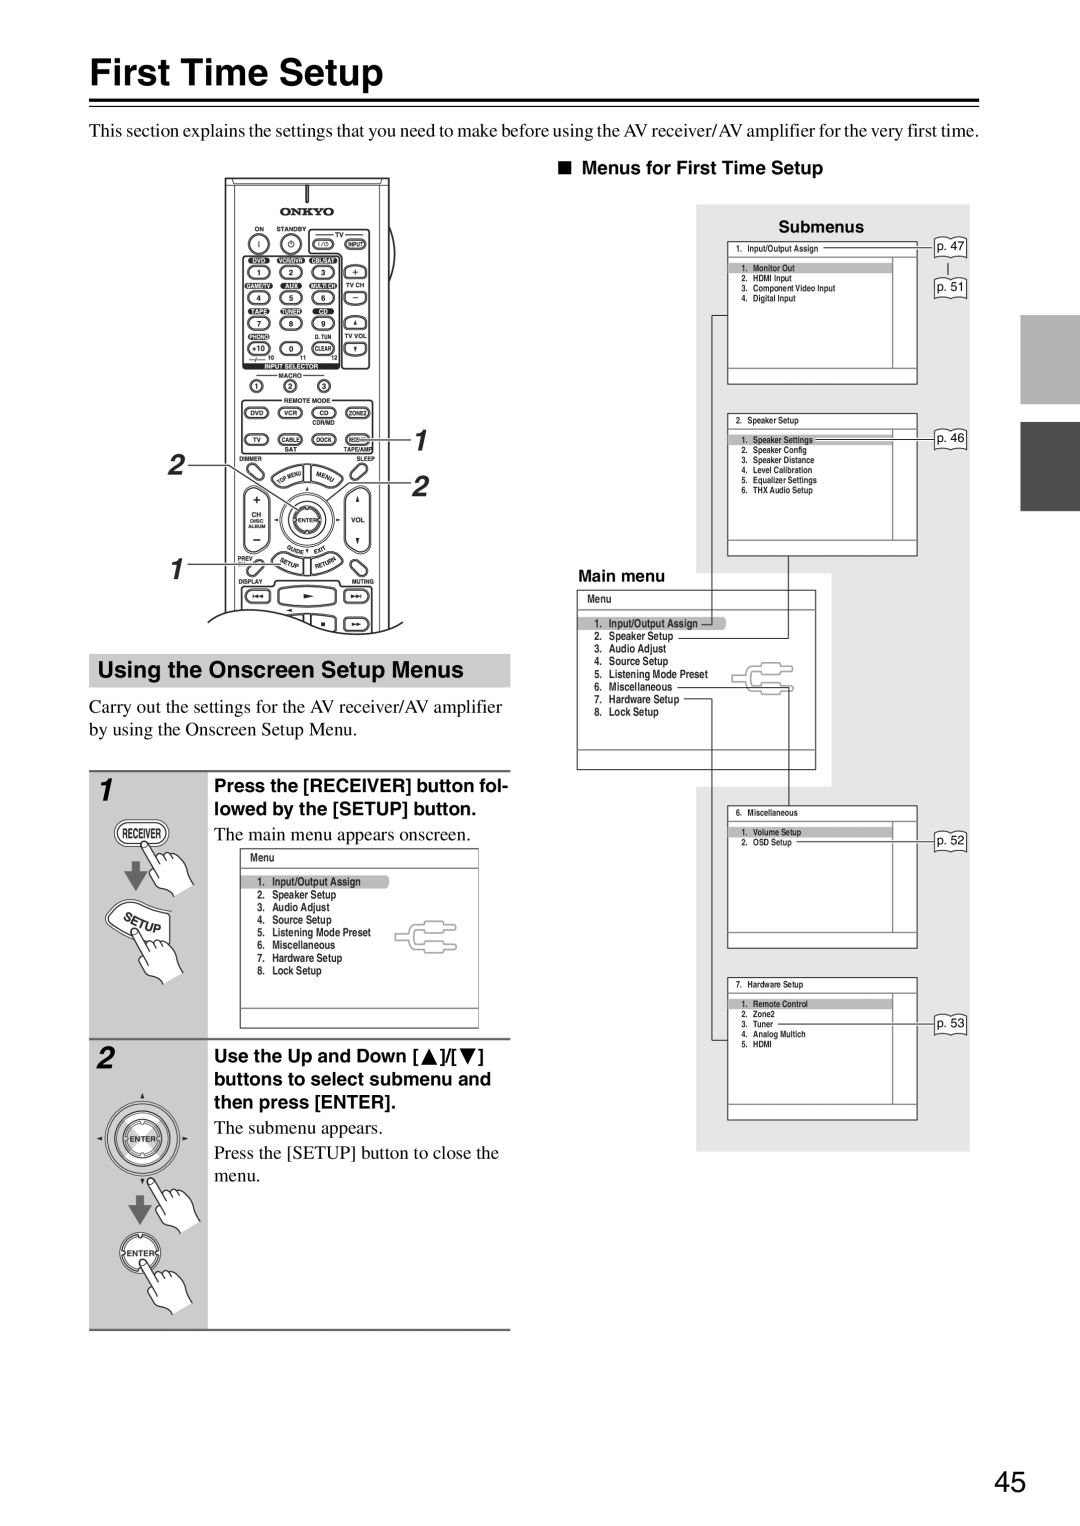 Onkyo TX-SA705 instruction manual First Time Setup, Using the Onscreen Setup Menus 